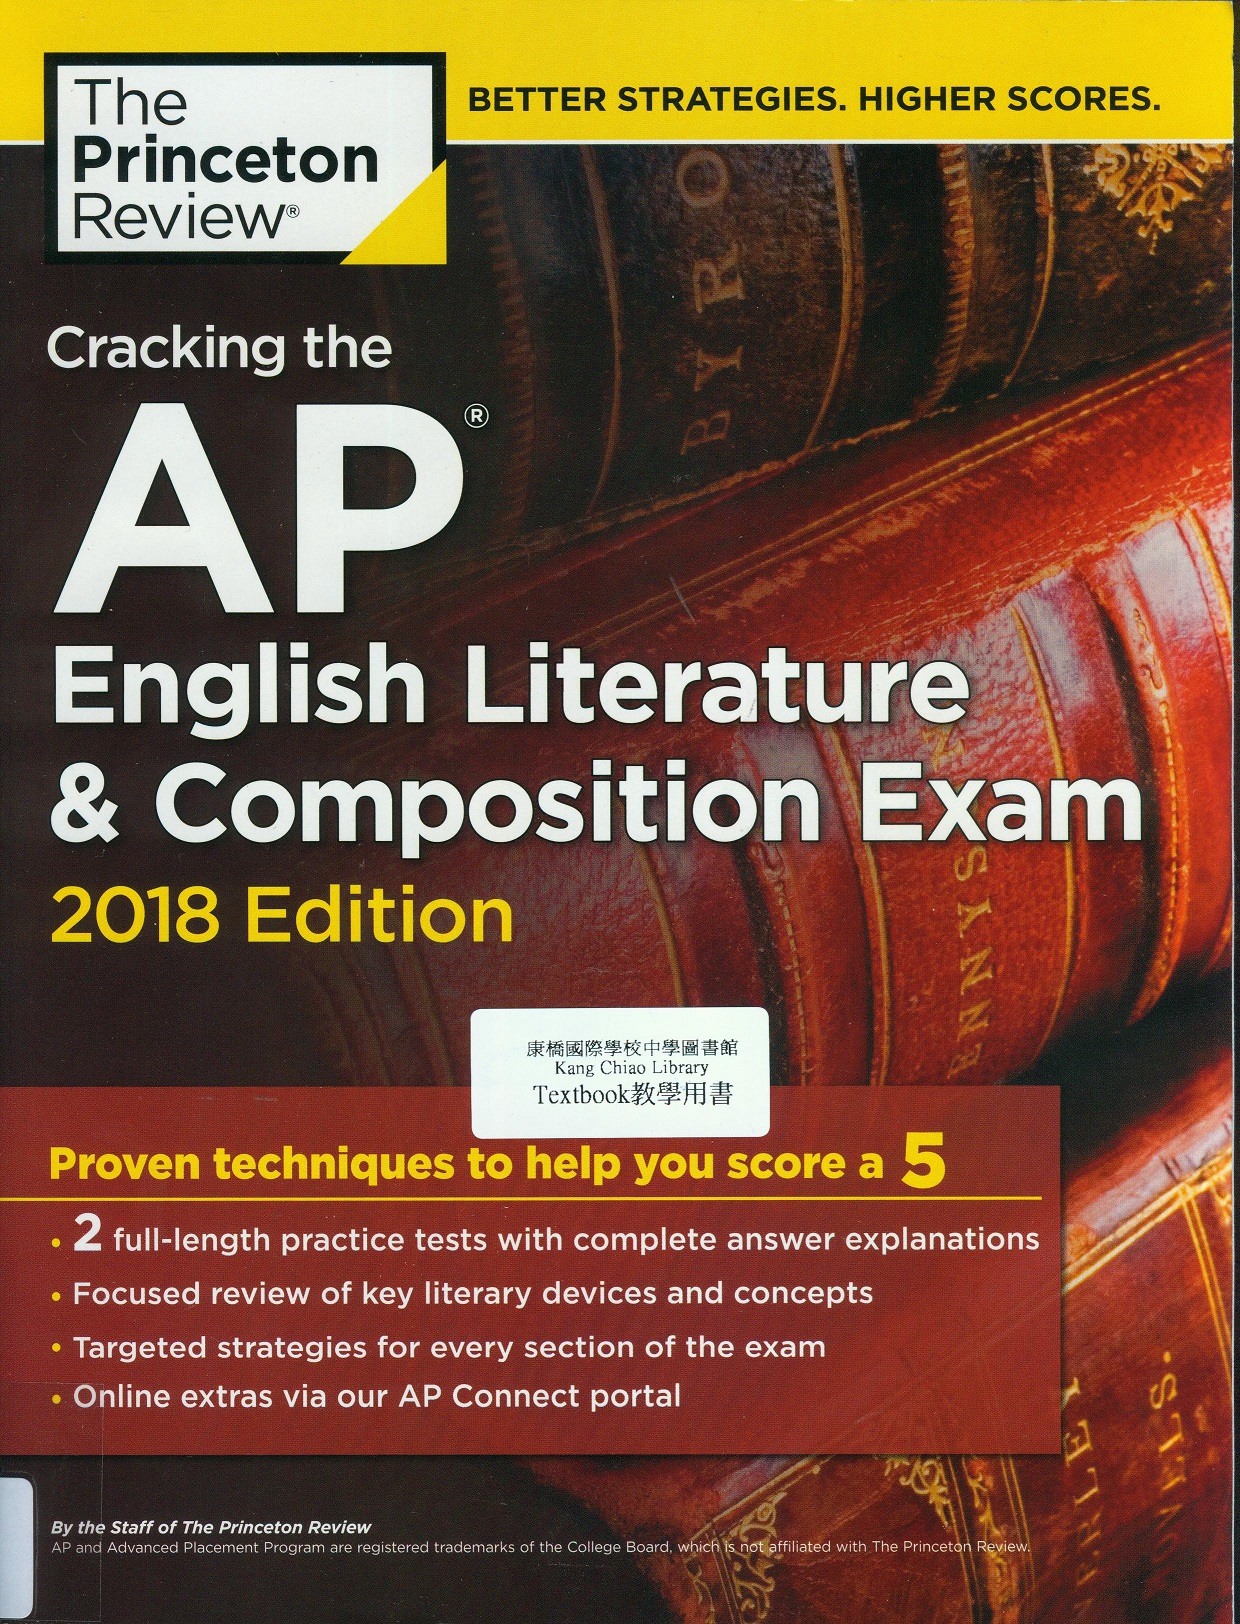 Cracking the AP English literature & composition exam 2018